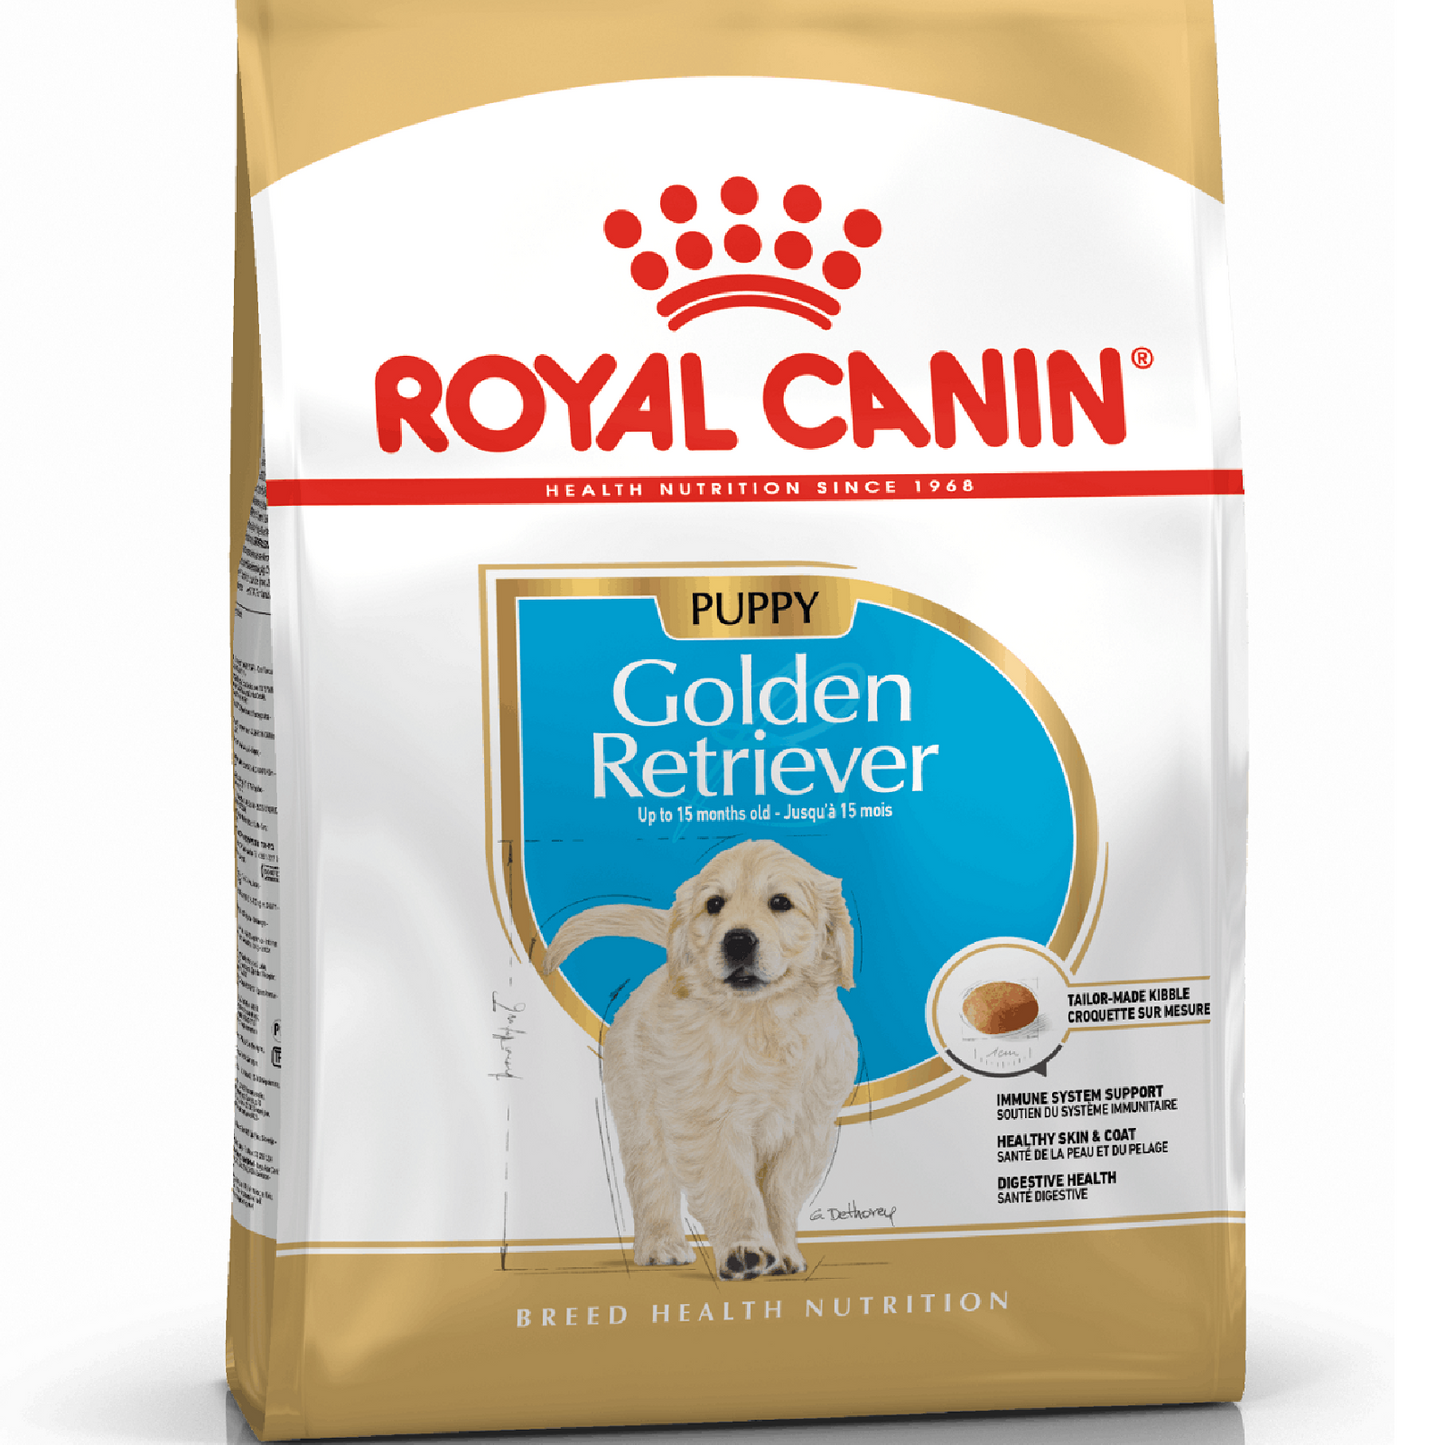 ROYAL CANIN - Golden Retriever Puppy